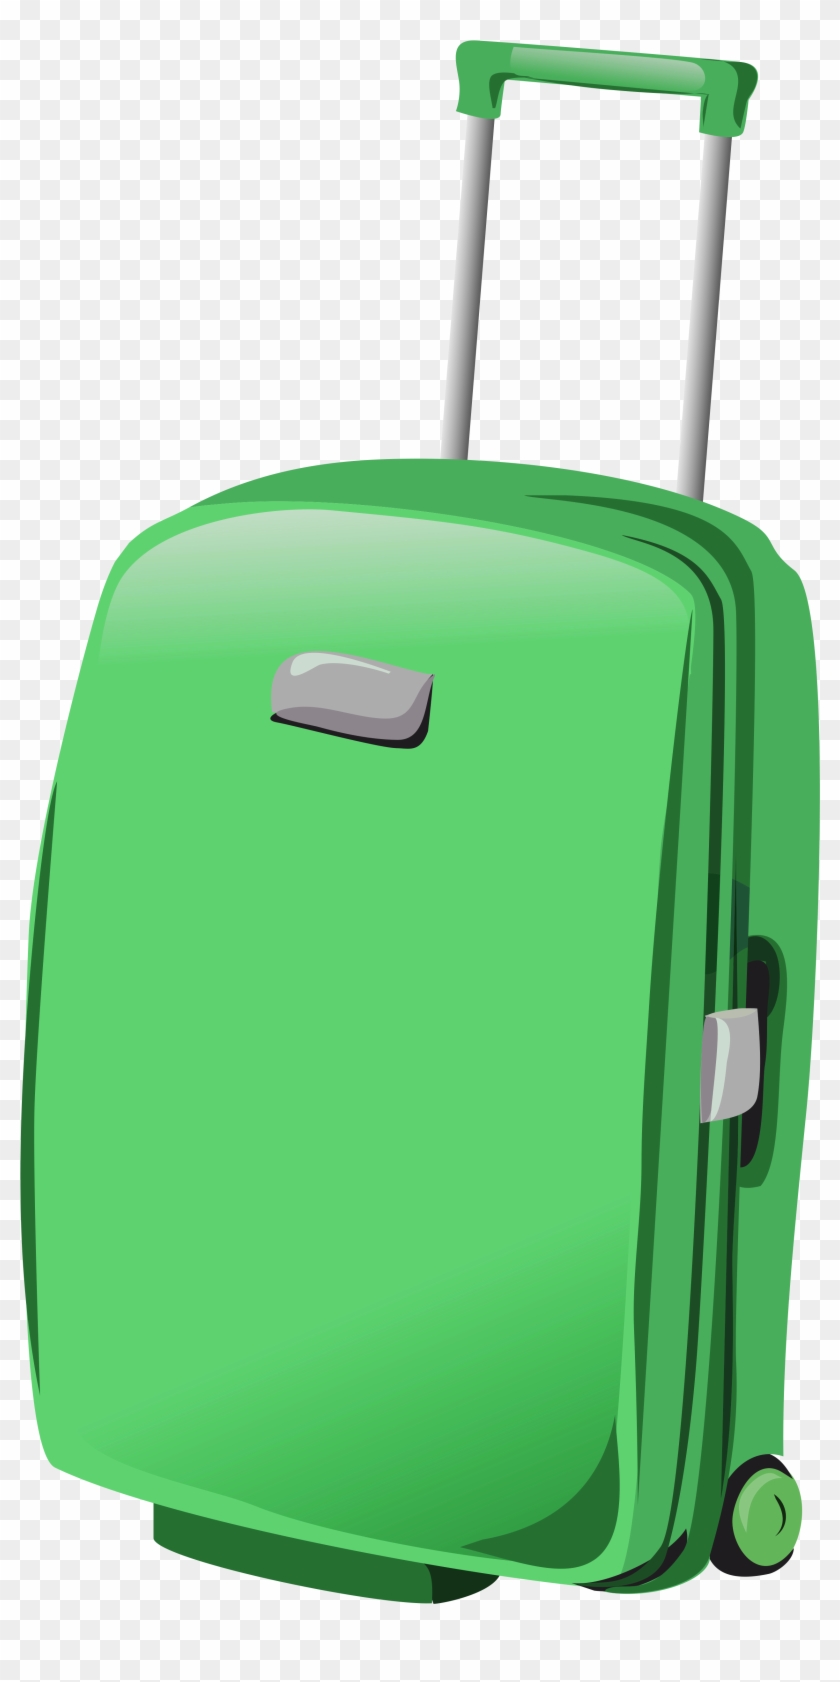 Green Suitcase Png Clipart - Transparent Background Suitcase Clipart #222379